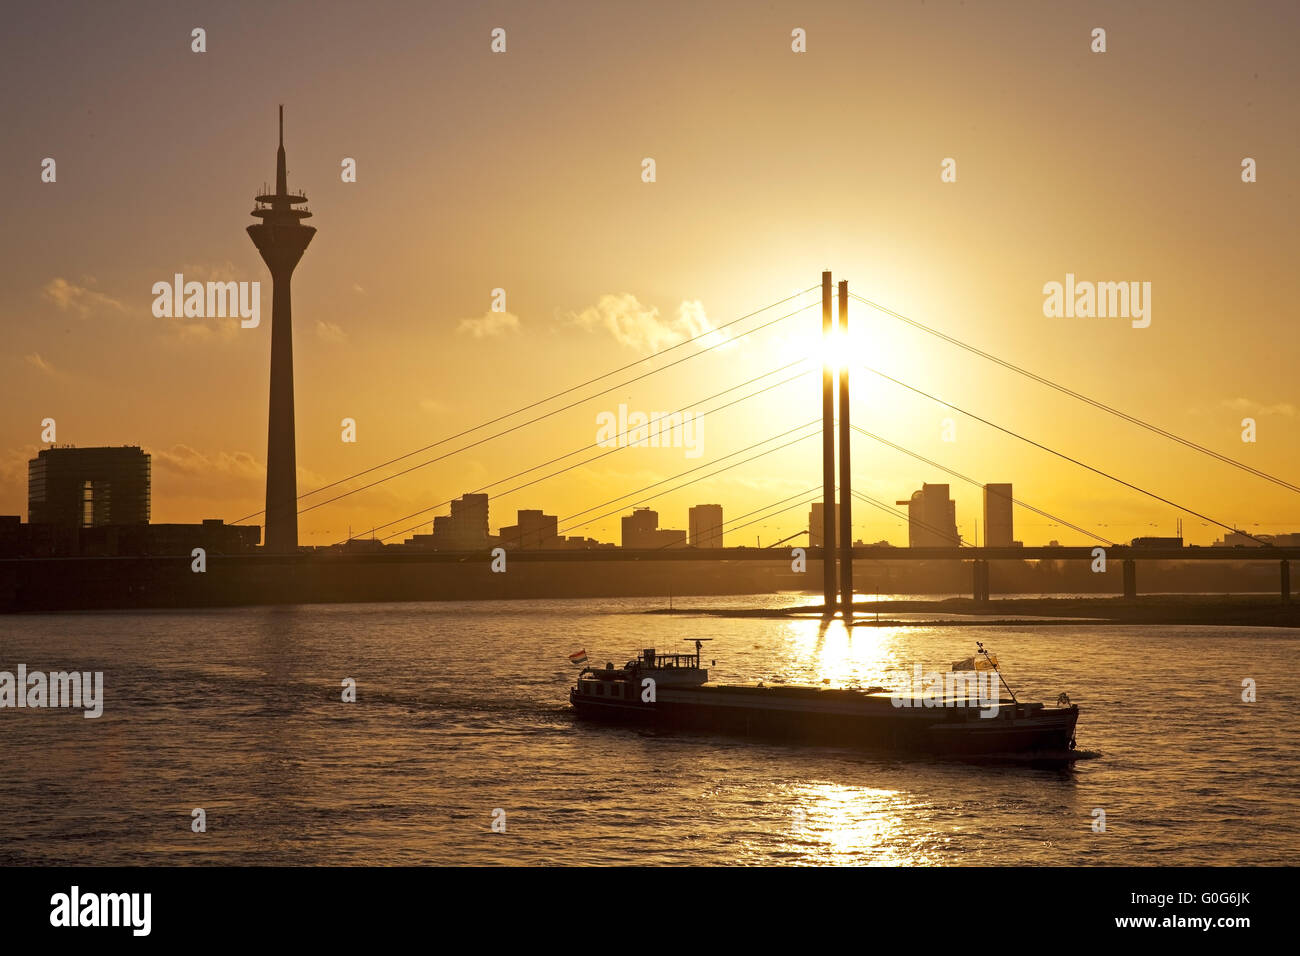 The Rhine with cargo ship, city gate, the Rhine Tower and the Rheinkniebruecke, Duesseldorf, Germany Stock Photo